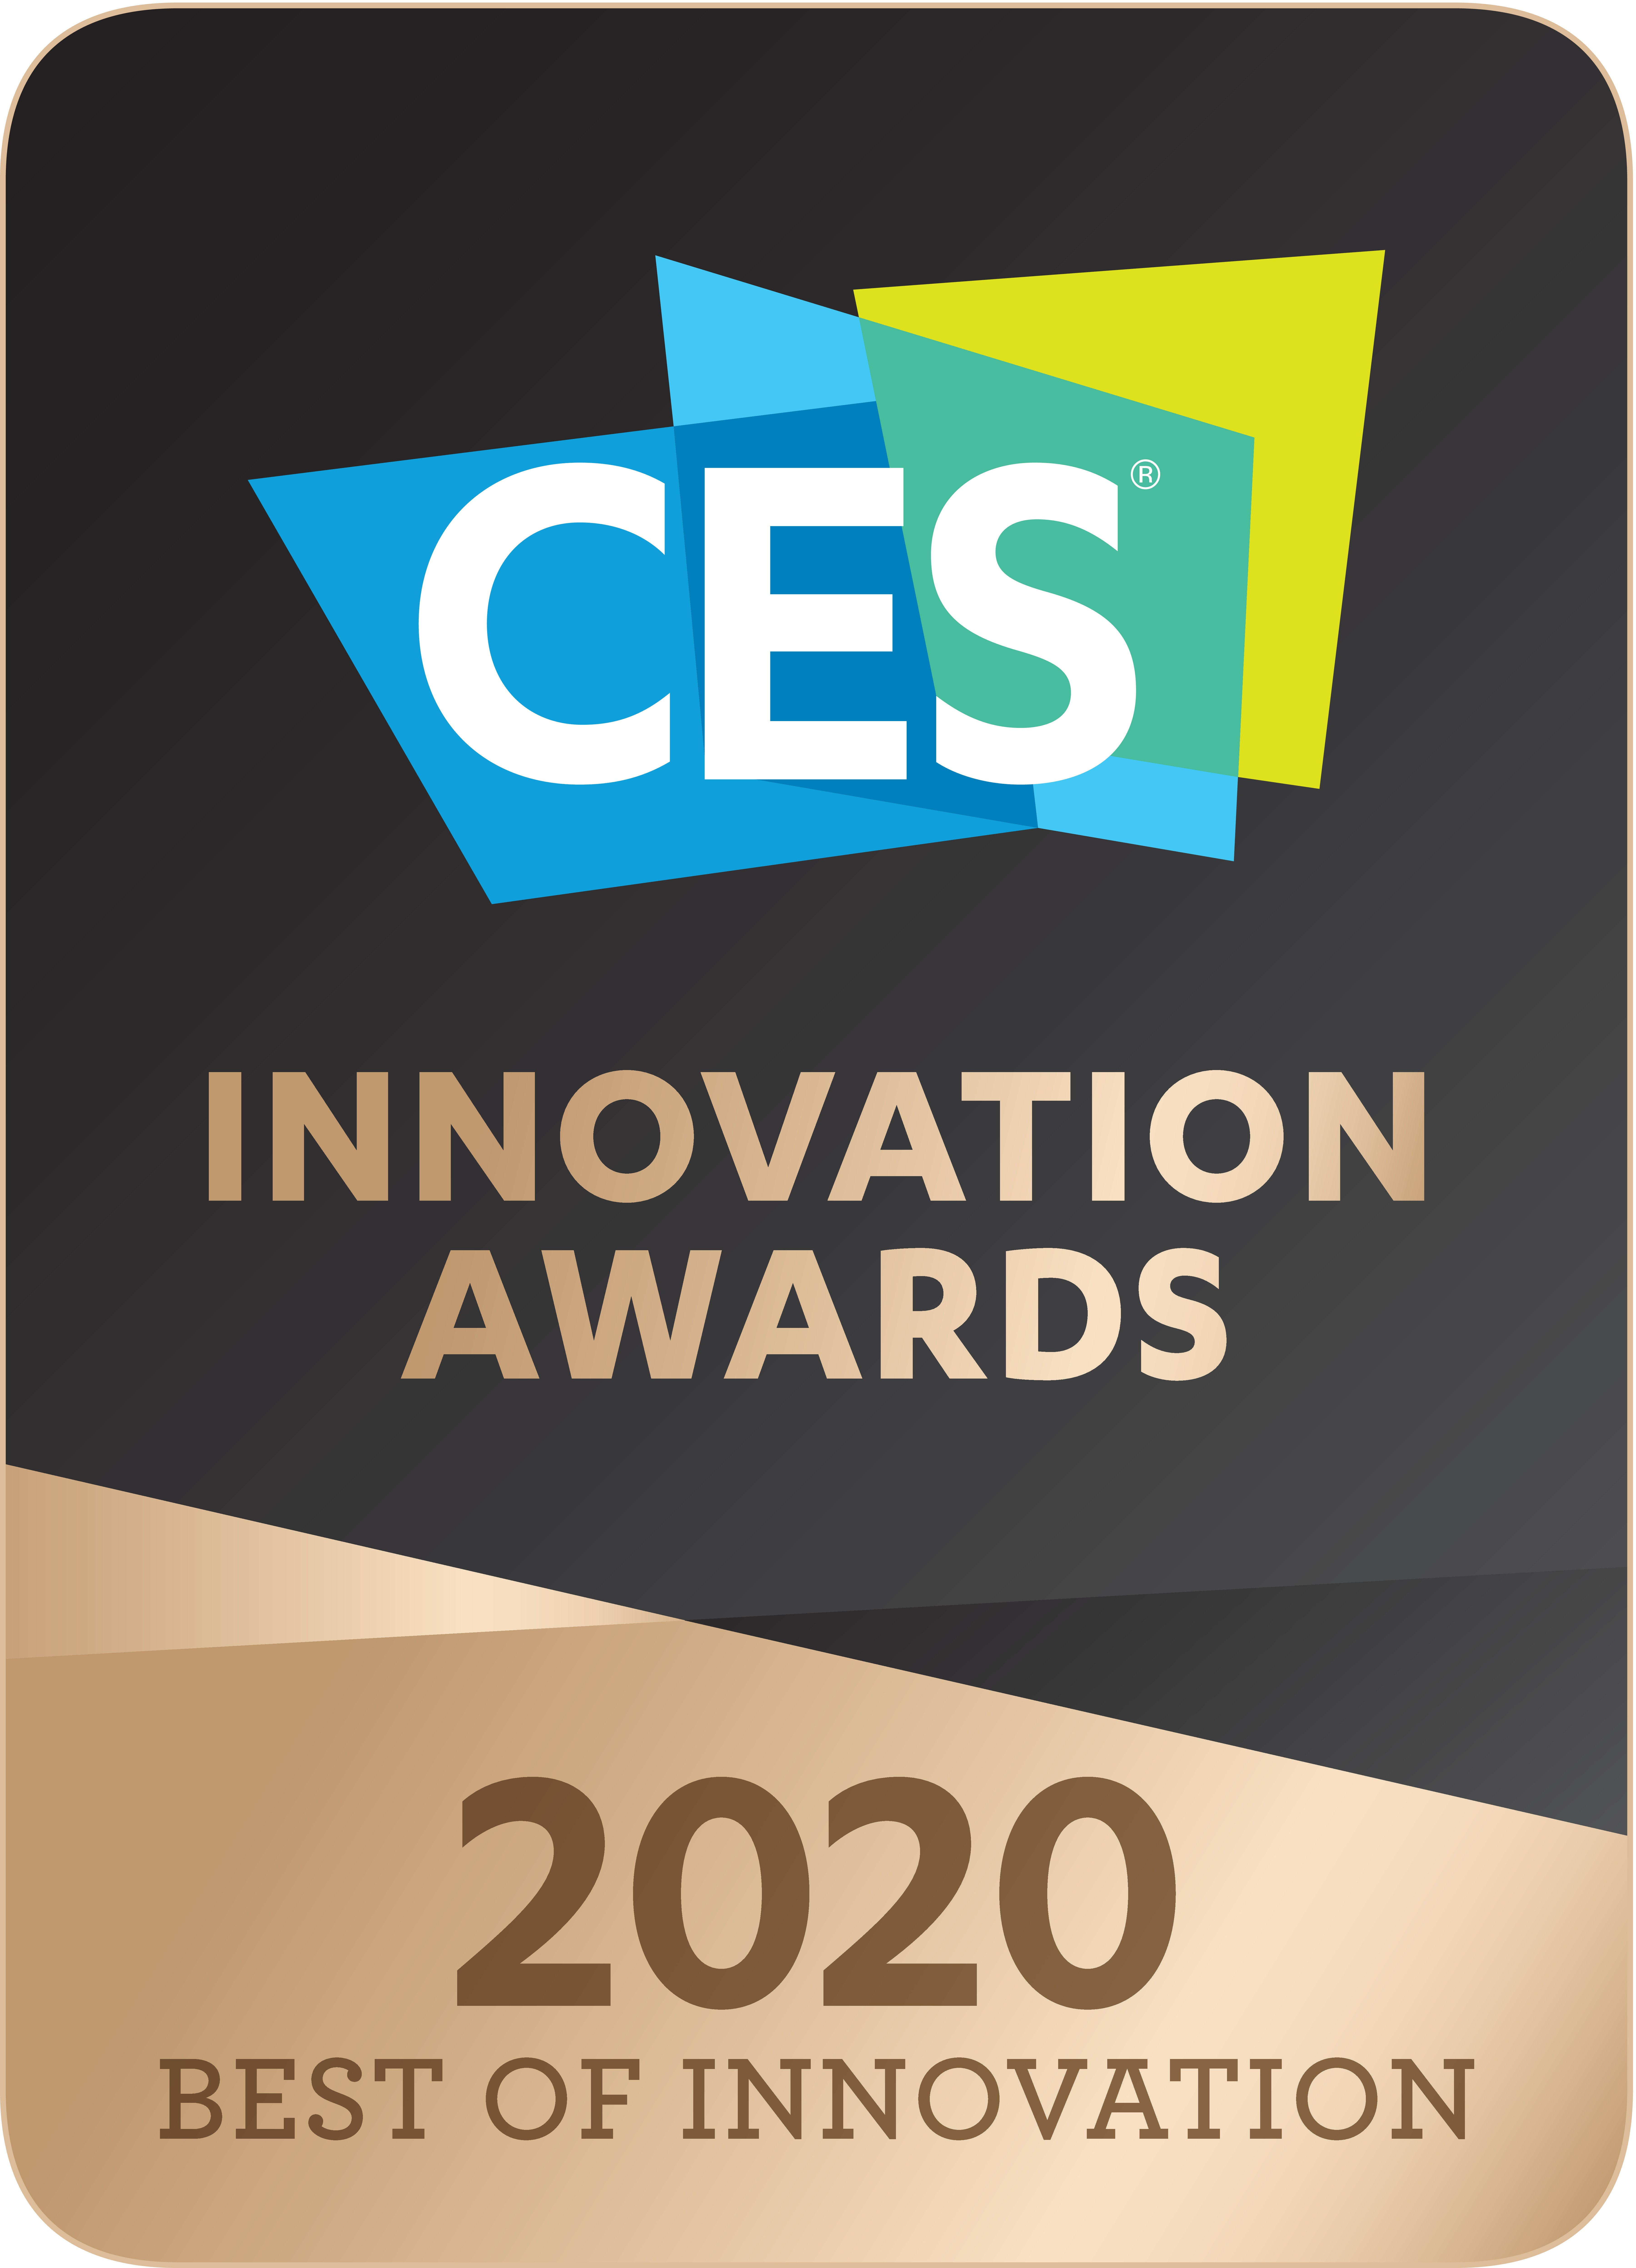 CES2020 Innovation Awards Best of Innovation